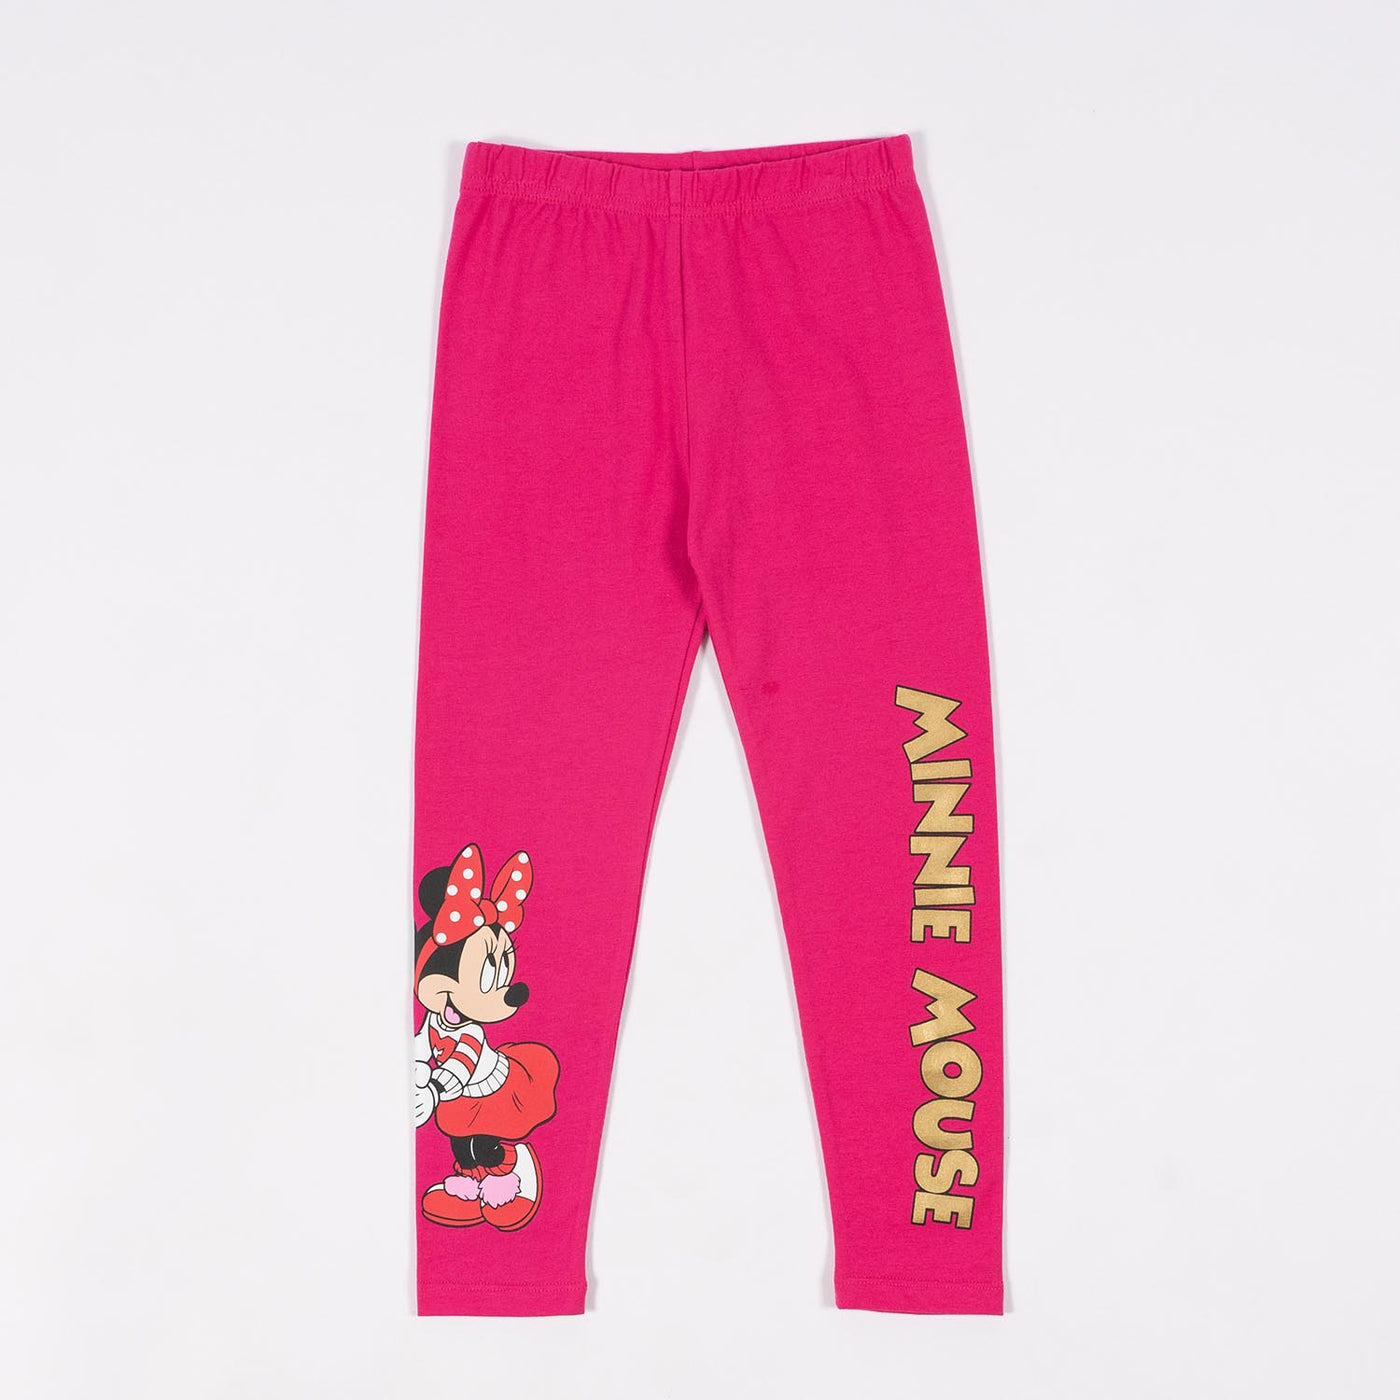 Minnie Mouse Girl Legging - กางเกงเลกกิ้งเด็ก มินนี่เมาส์